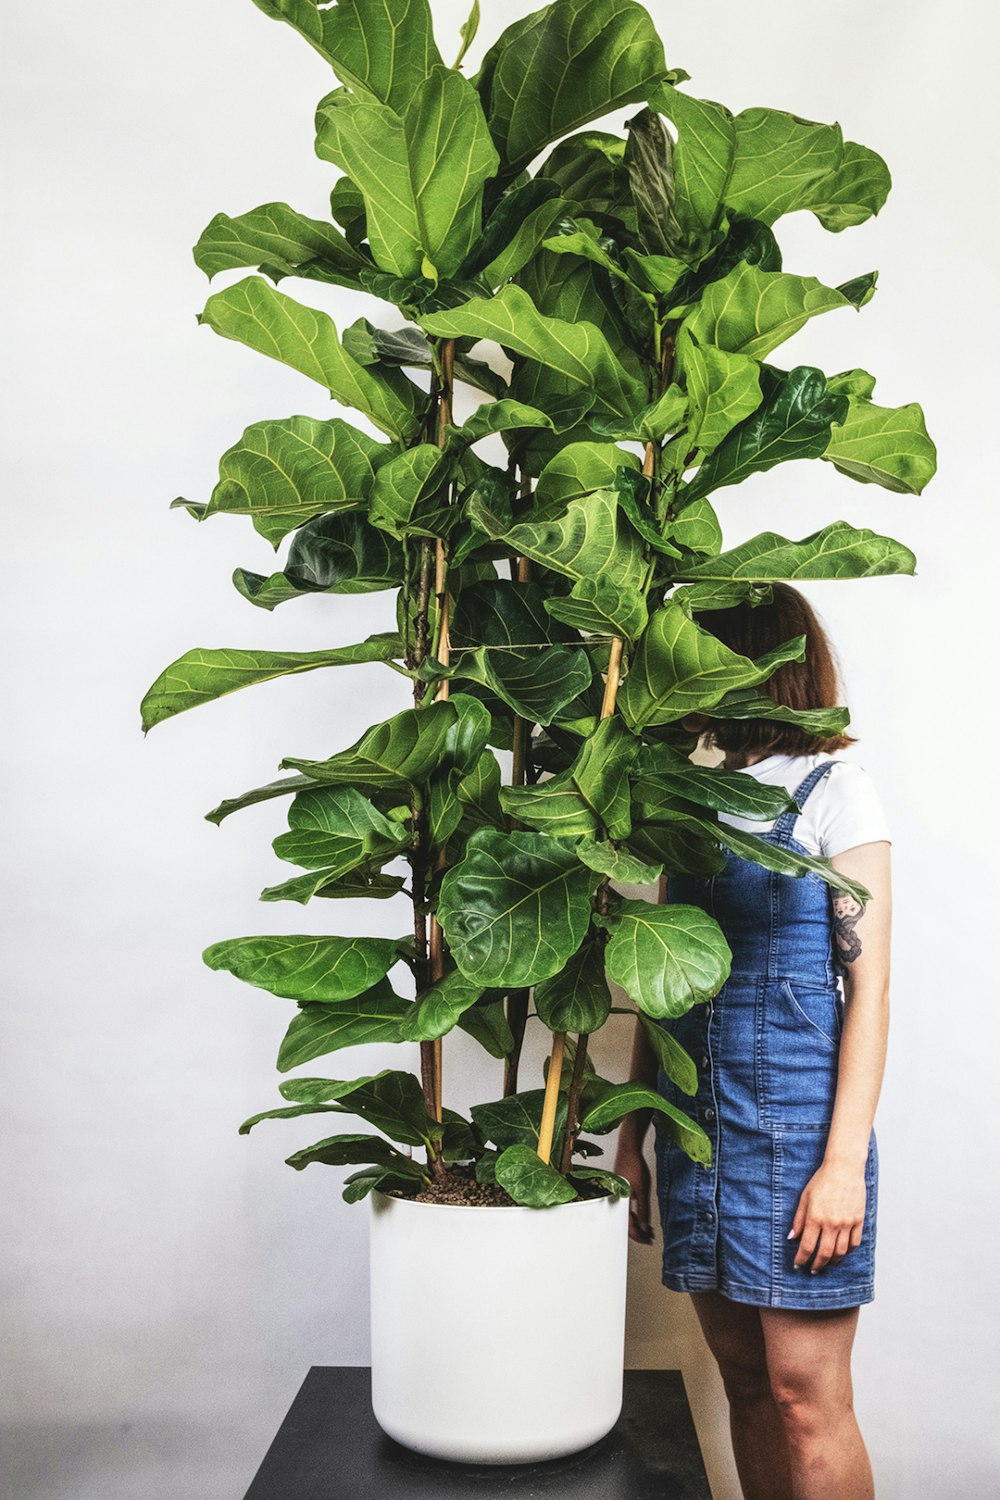 Una donna in piedi accanto a una grande pianta in vaso